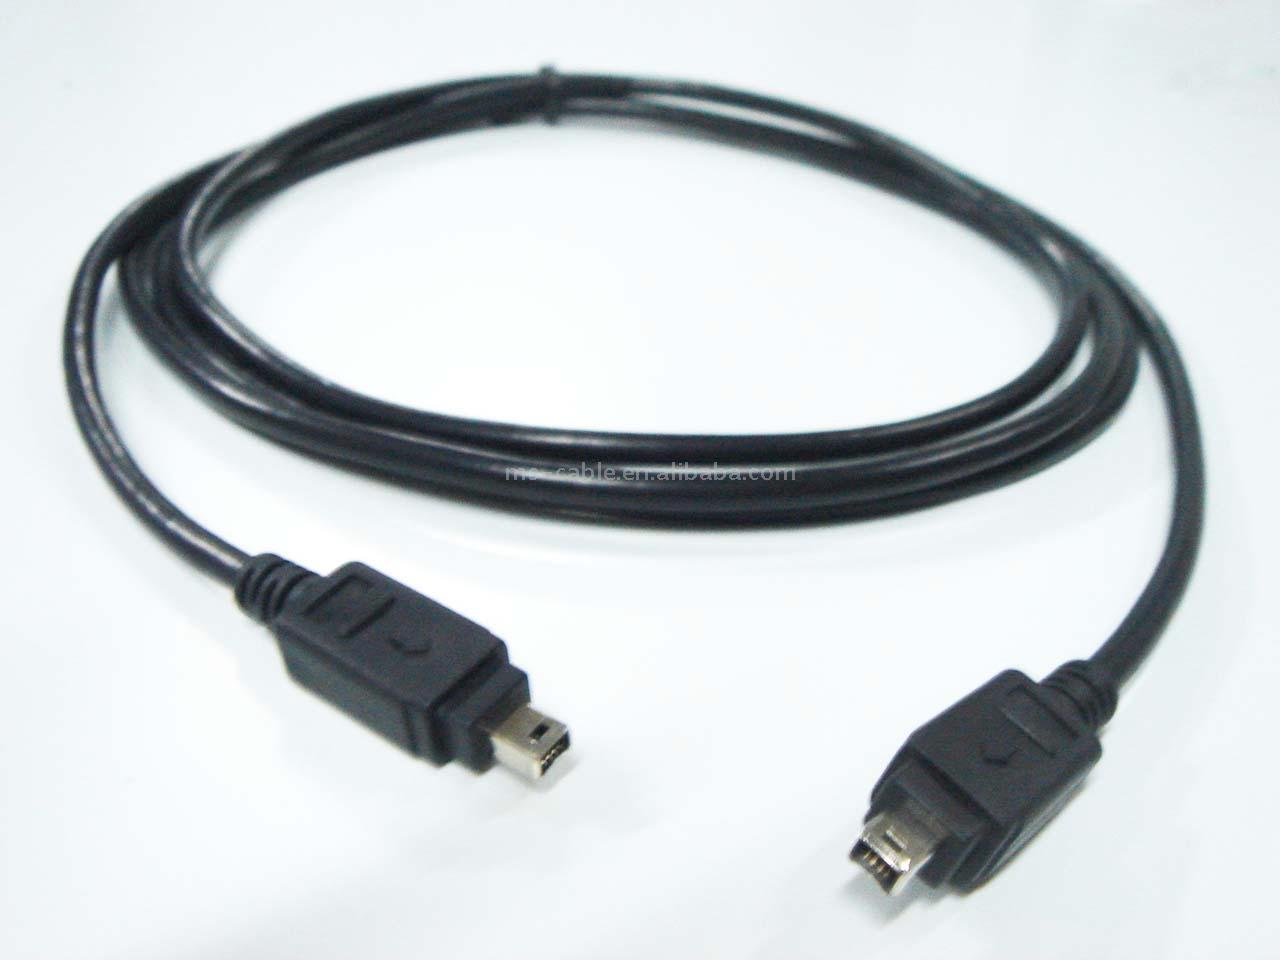  Firewire 1394 Cable (Firewire 1394 кабель)